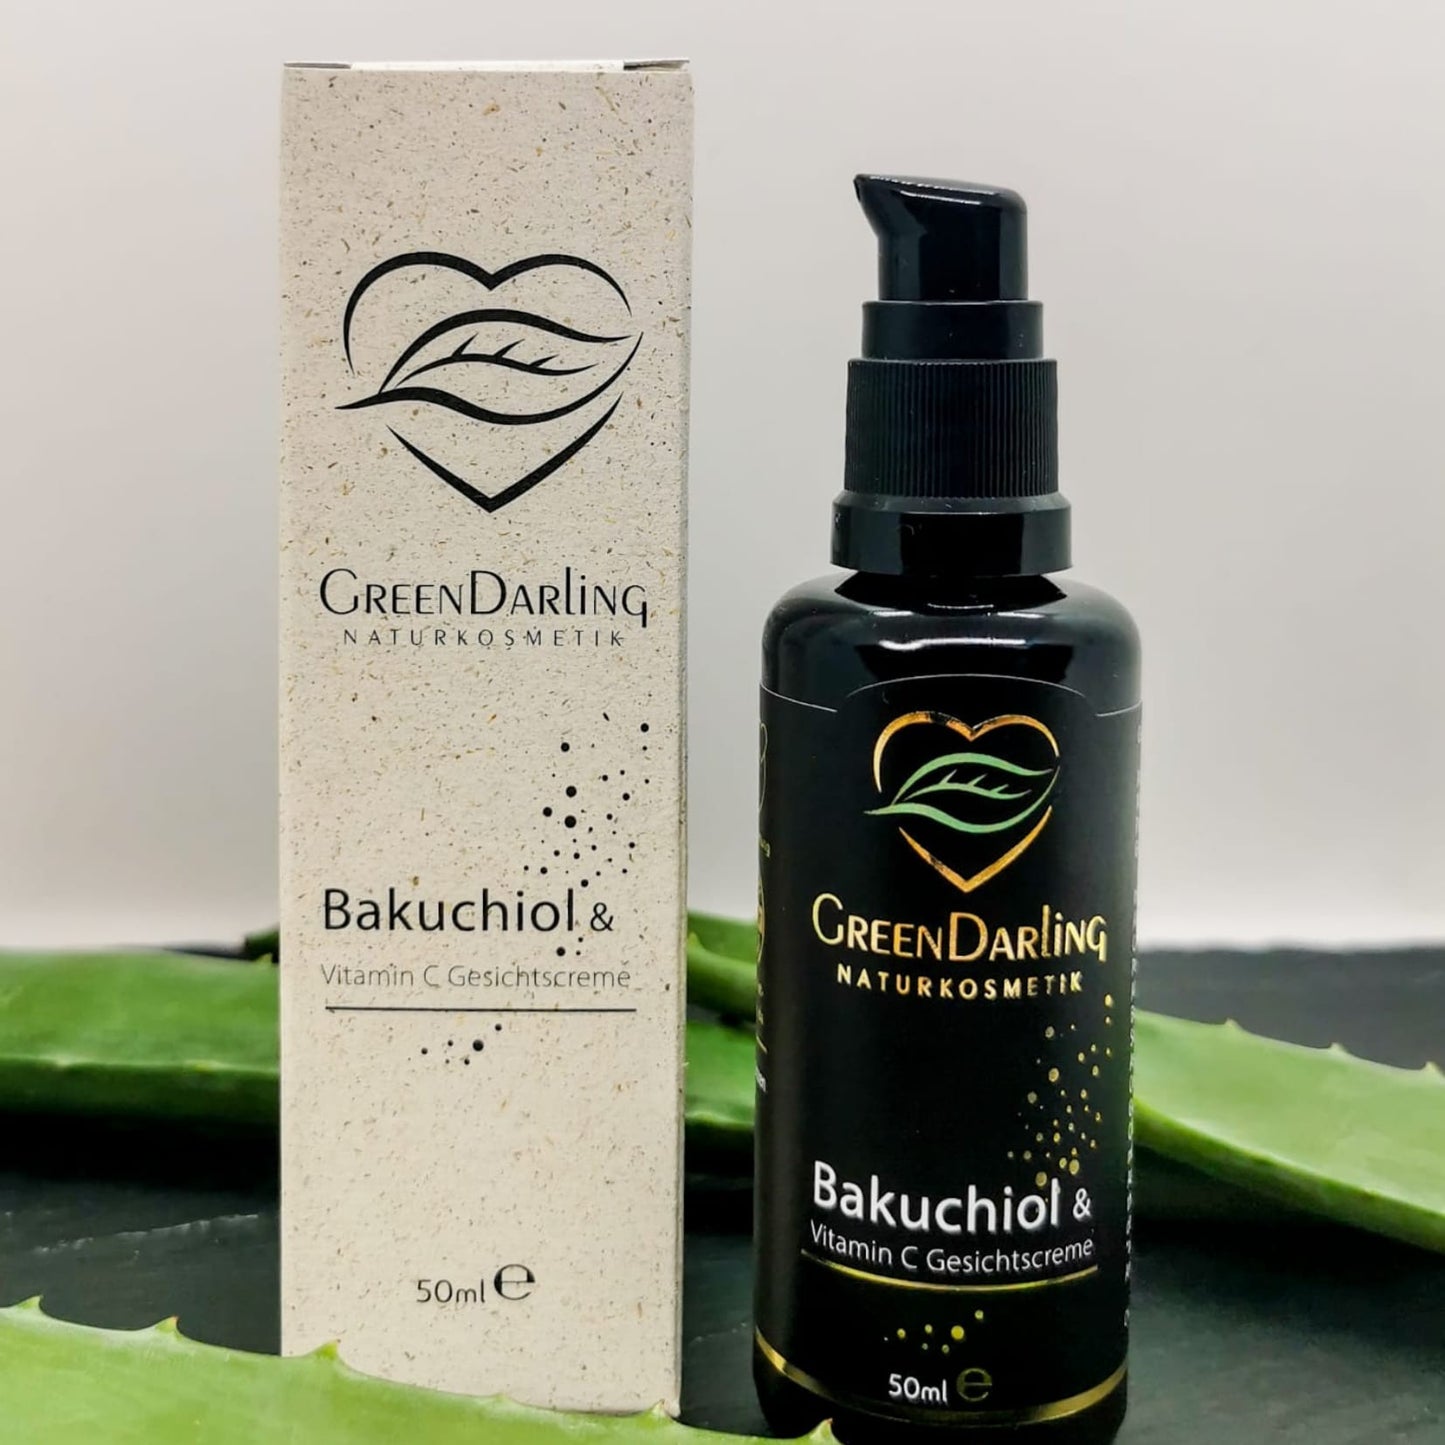 Bakuchiol & Vitamin C Gesichtscreme